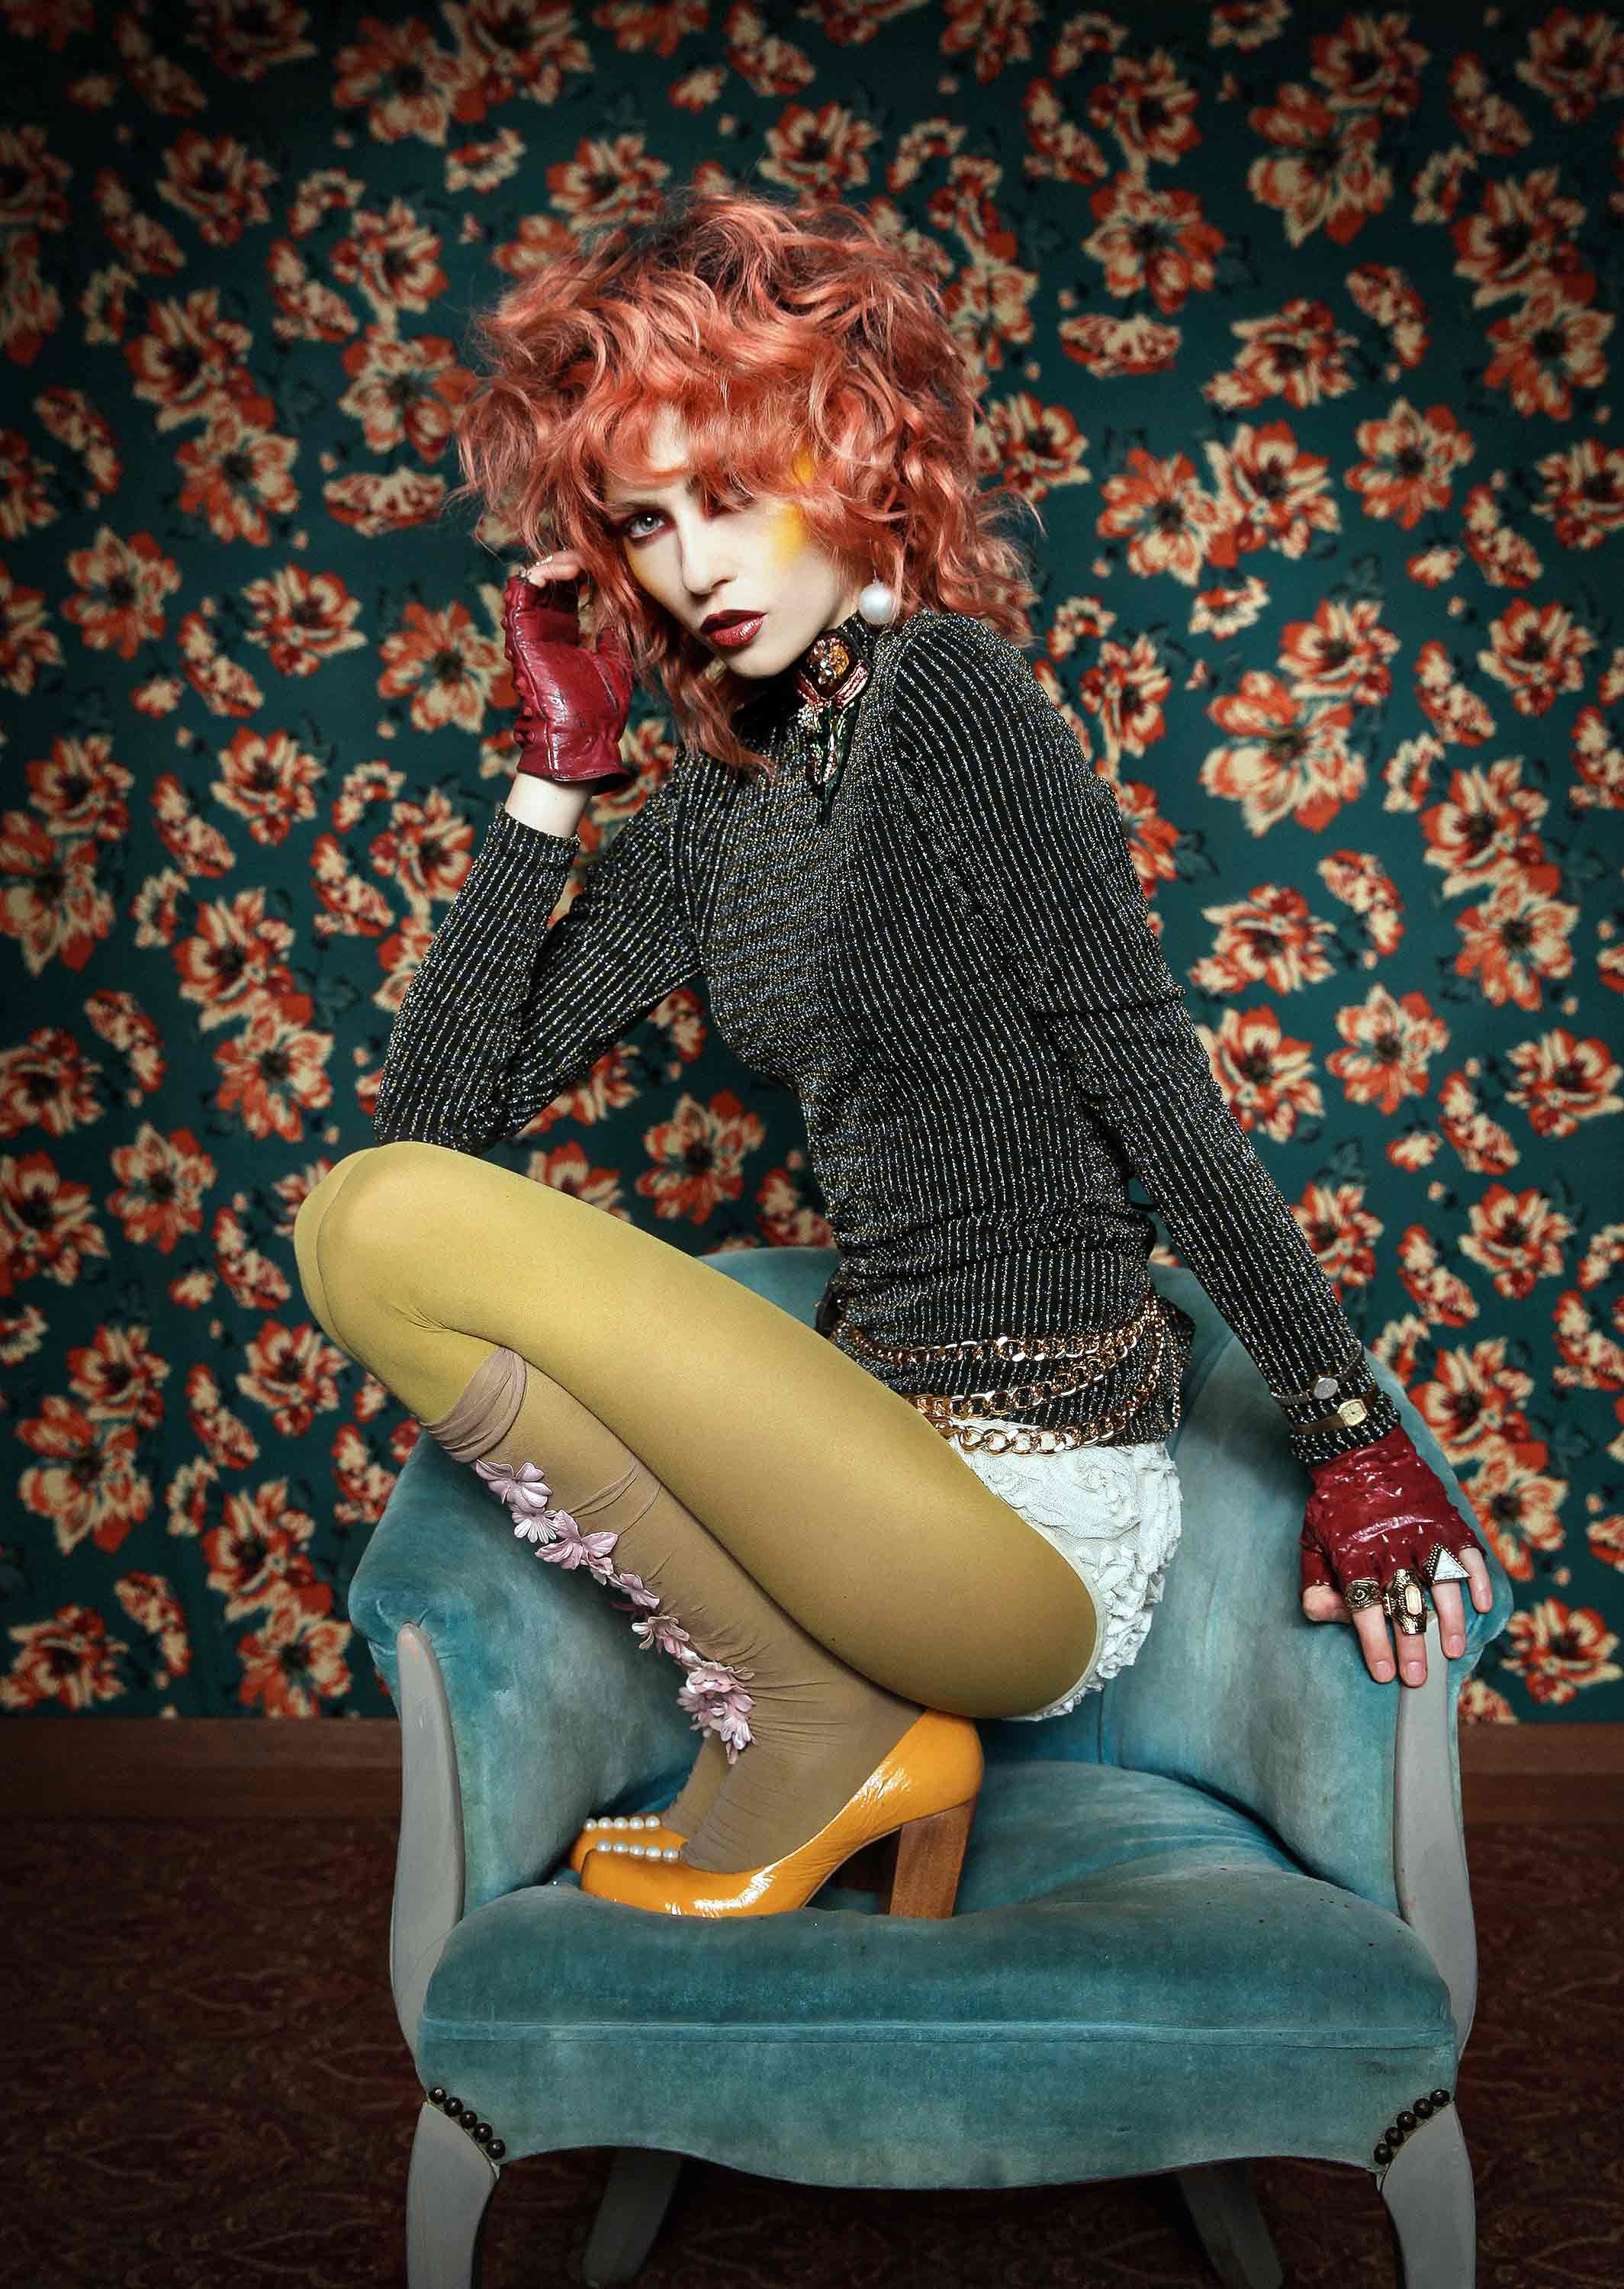 london-toronto-hair-fashion-beauty-photographers-studio-paula-tizzard-editorial-magazine-julie-vriesinga-anita-norris-models